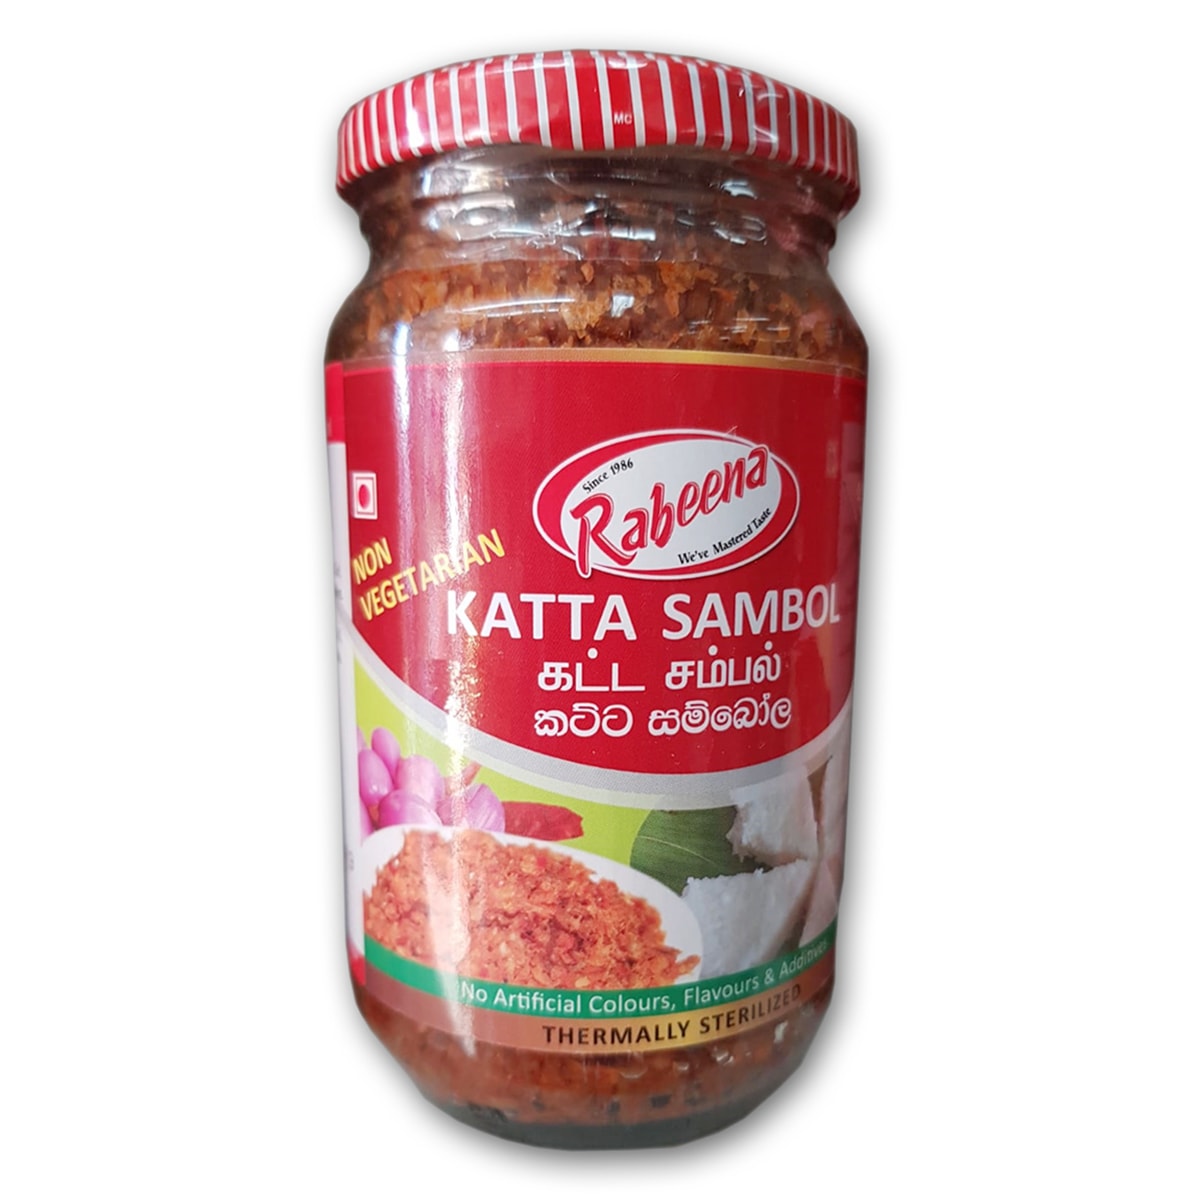 Buy Rabeena Katta Sambol (Non Vegetarian) - 300 gm